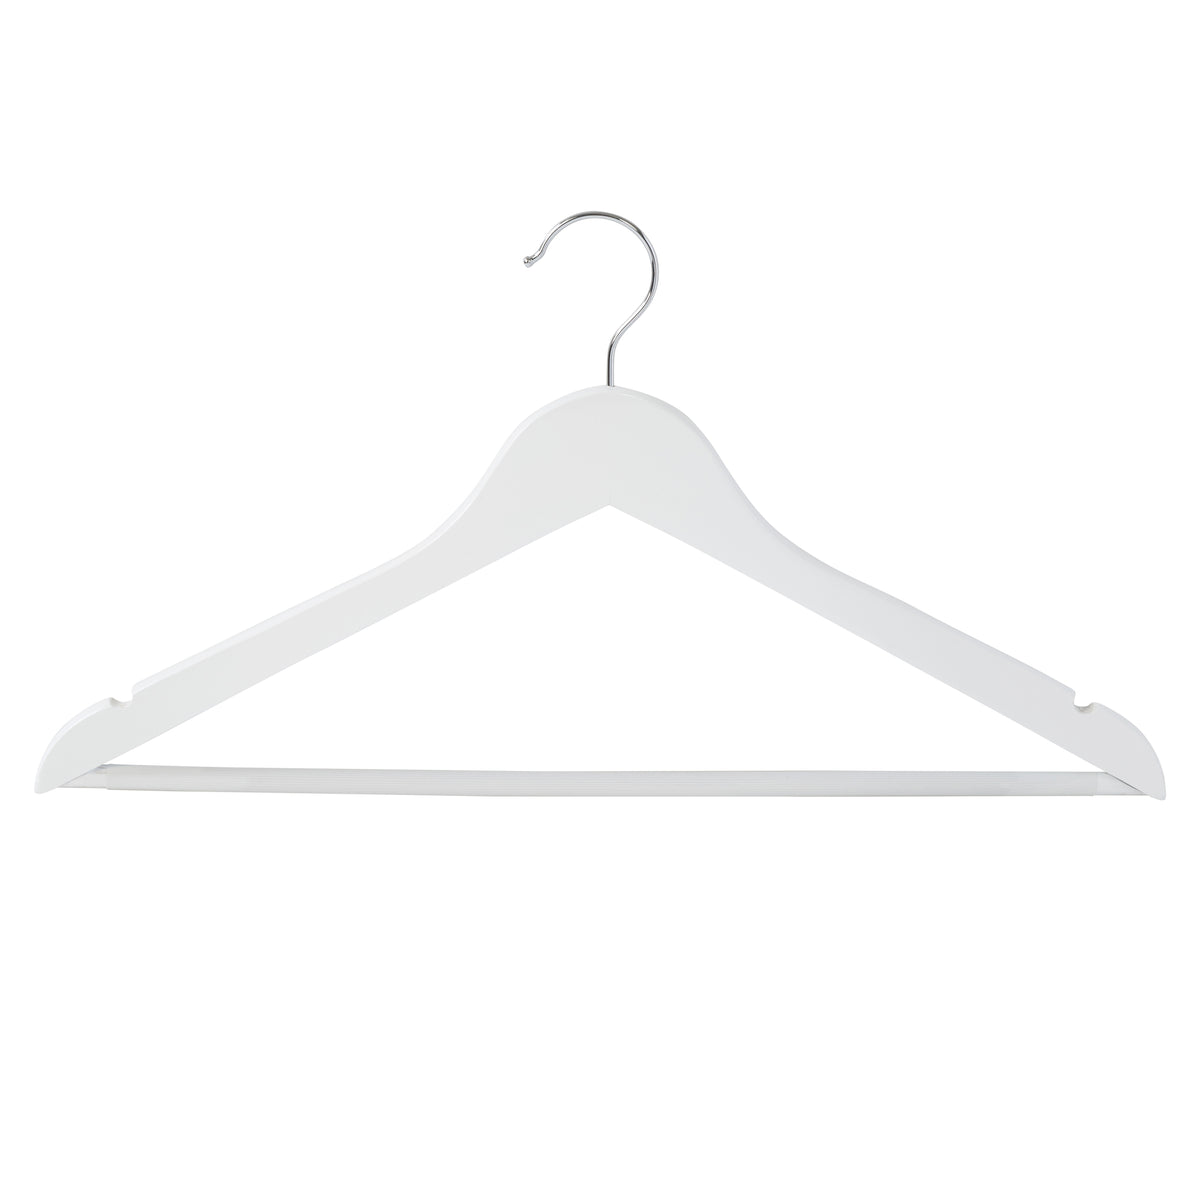 Honey-Can-Do White Rubber Hangers 50-Pack